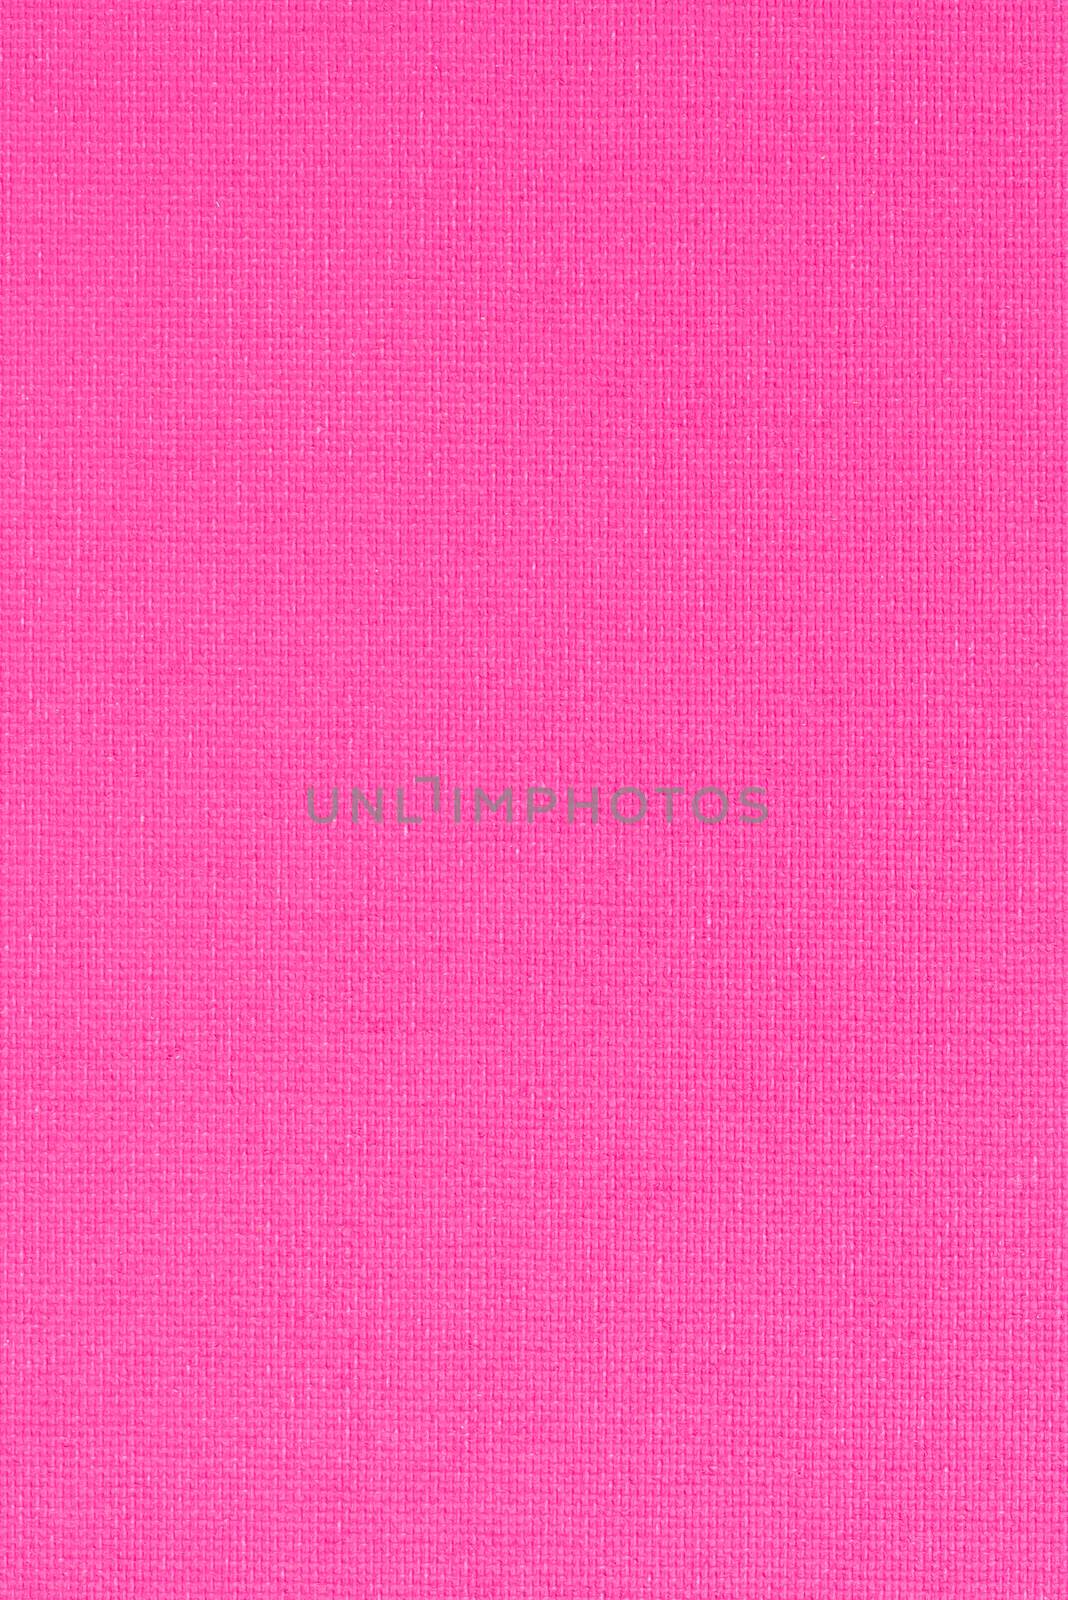 Pink vinyl texture by homydesign